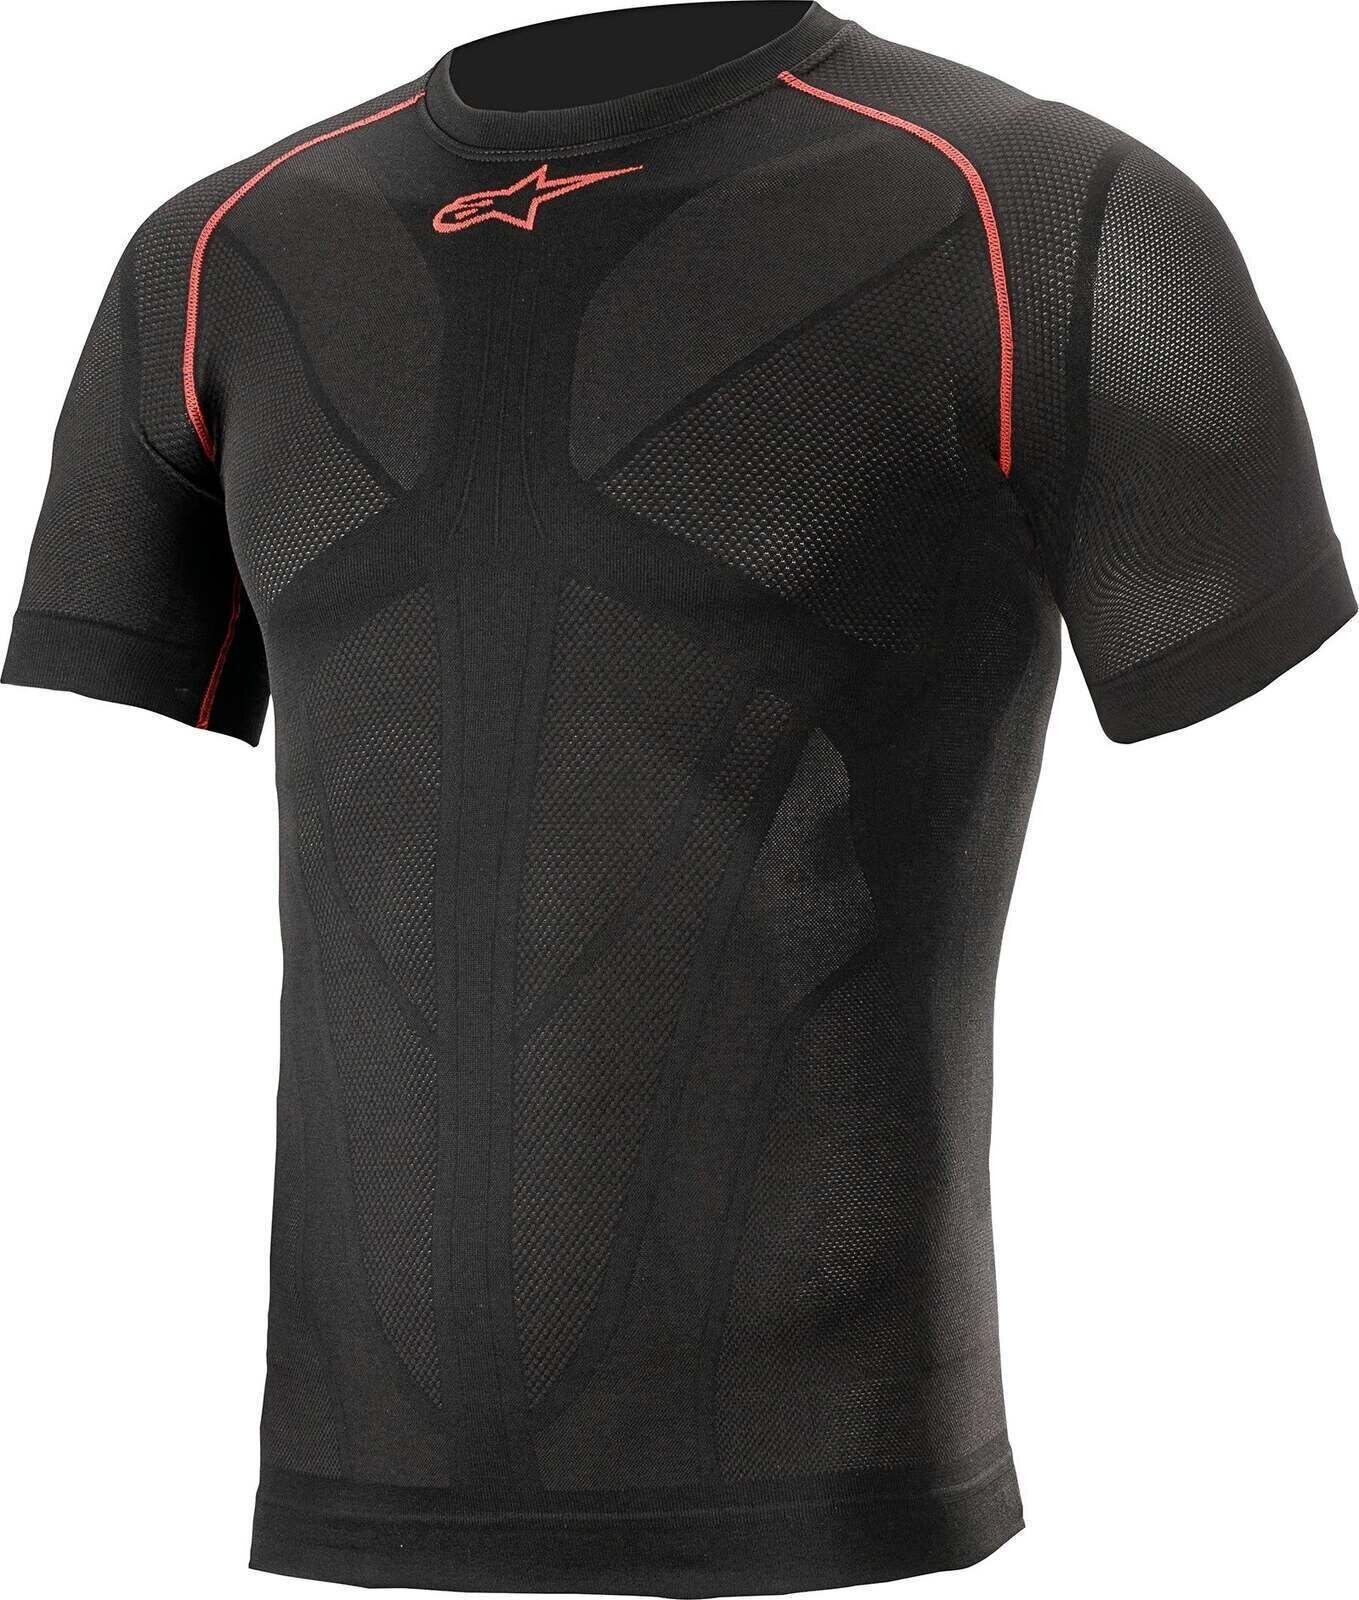 Motorcycle Functional Shirt Alpinestars Ride Tech V2 Top Short Sleeve Summer Black Red XL/2XL